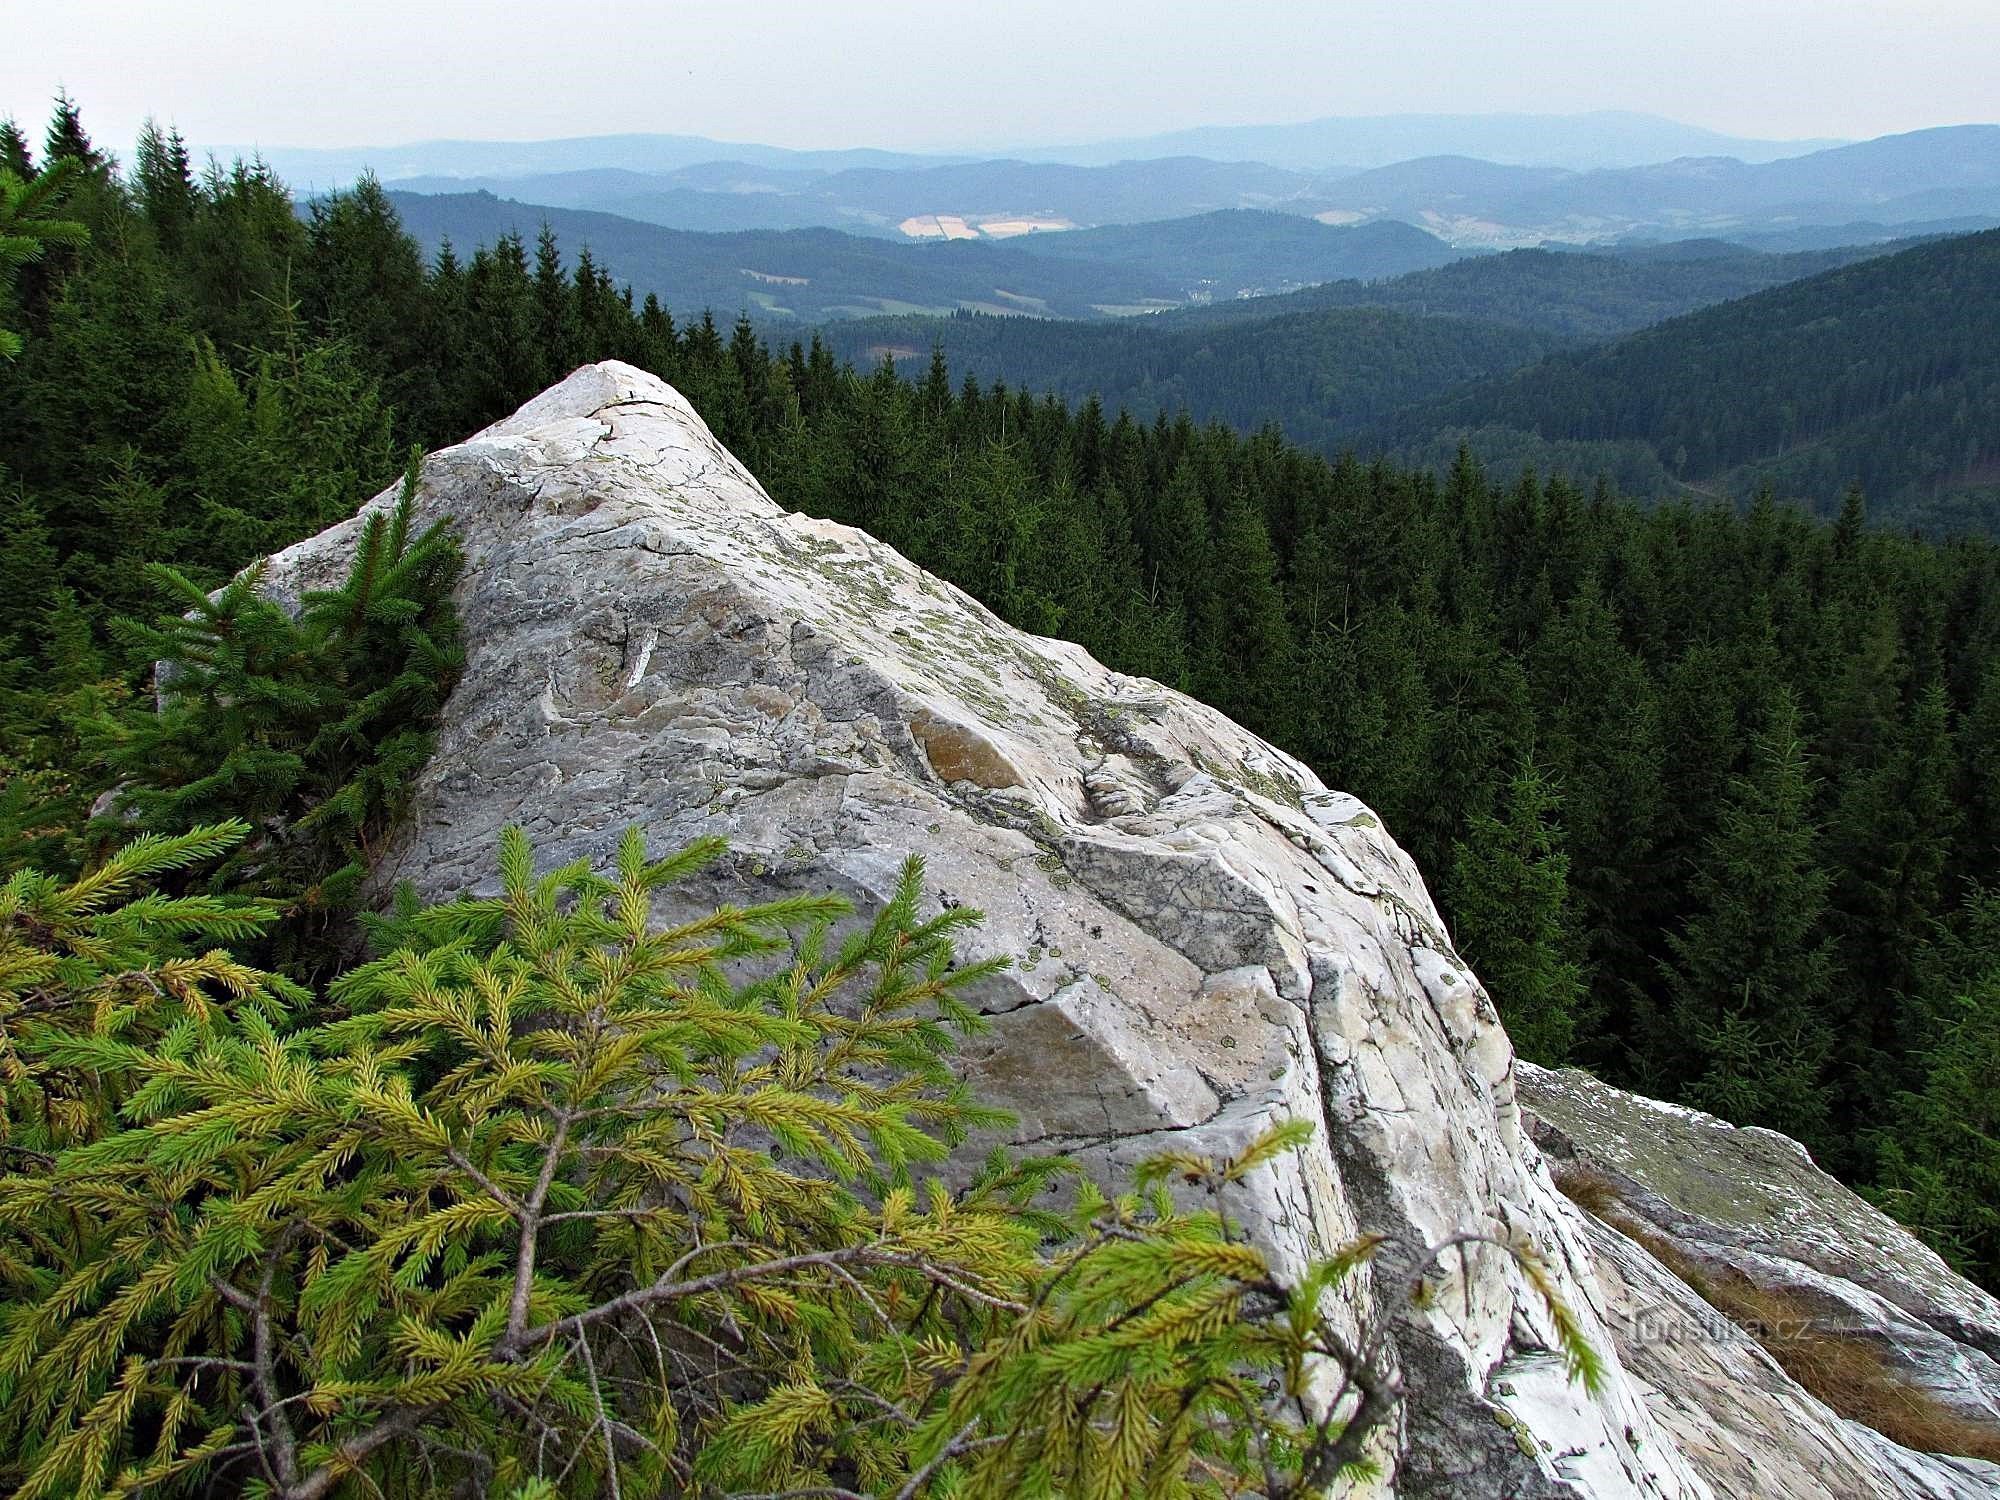 Jesenice rock viewpoints - 1. White stone